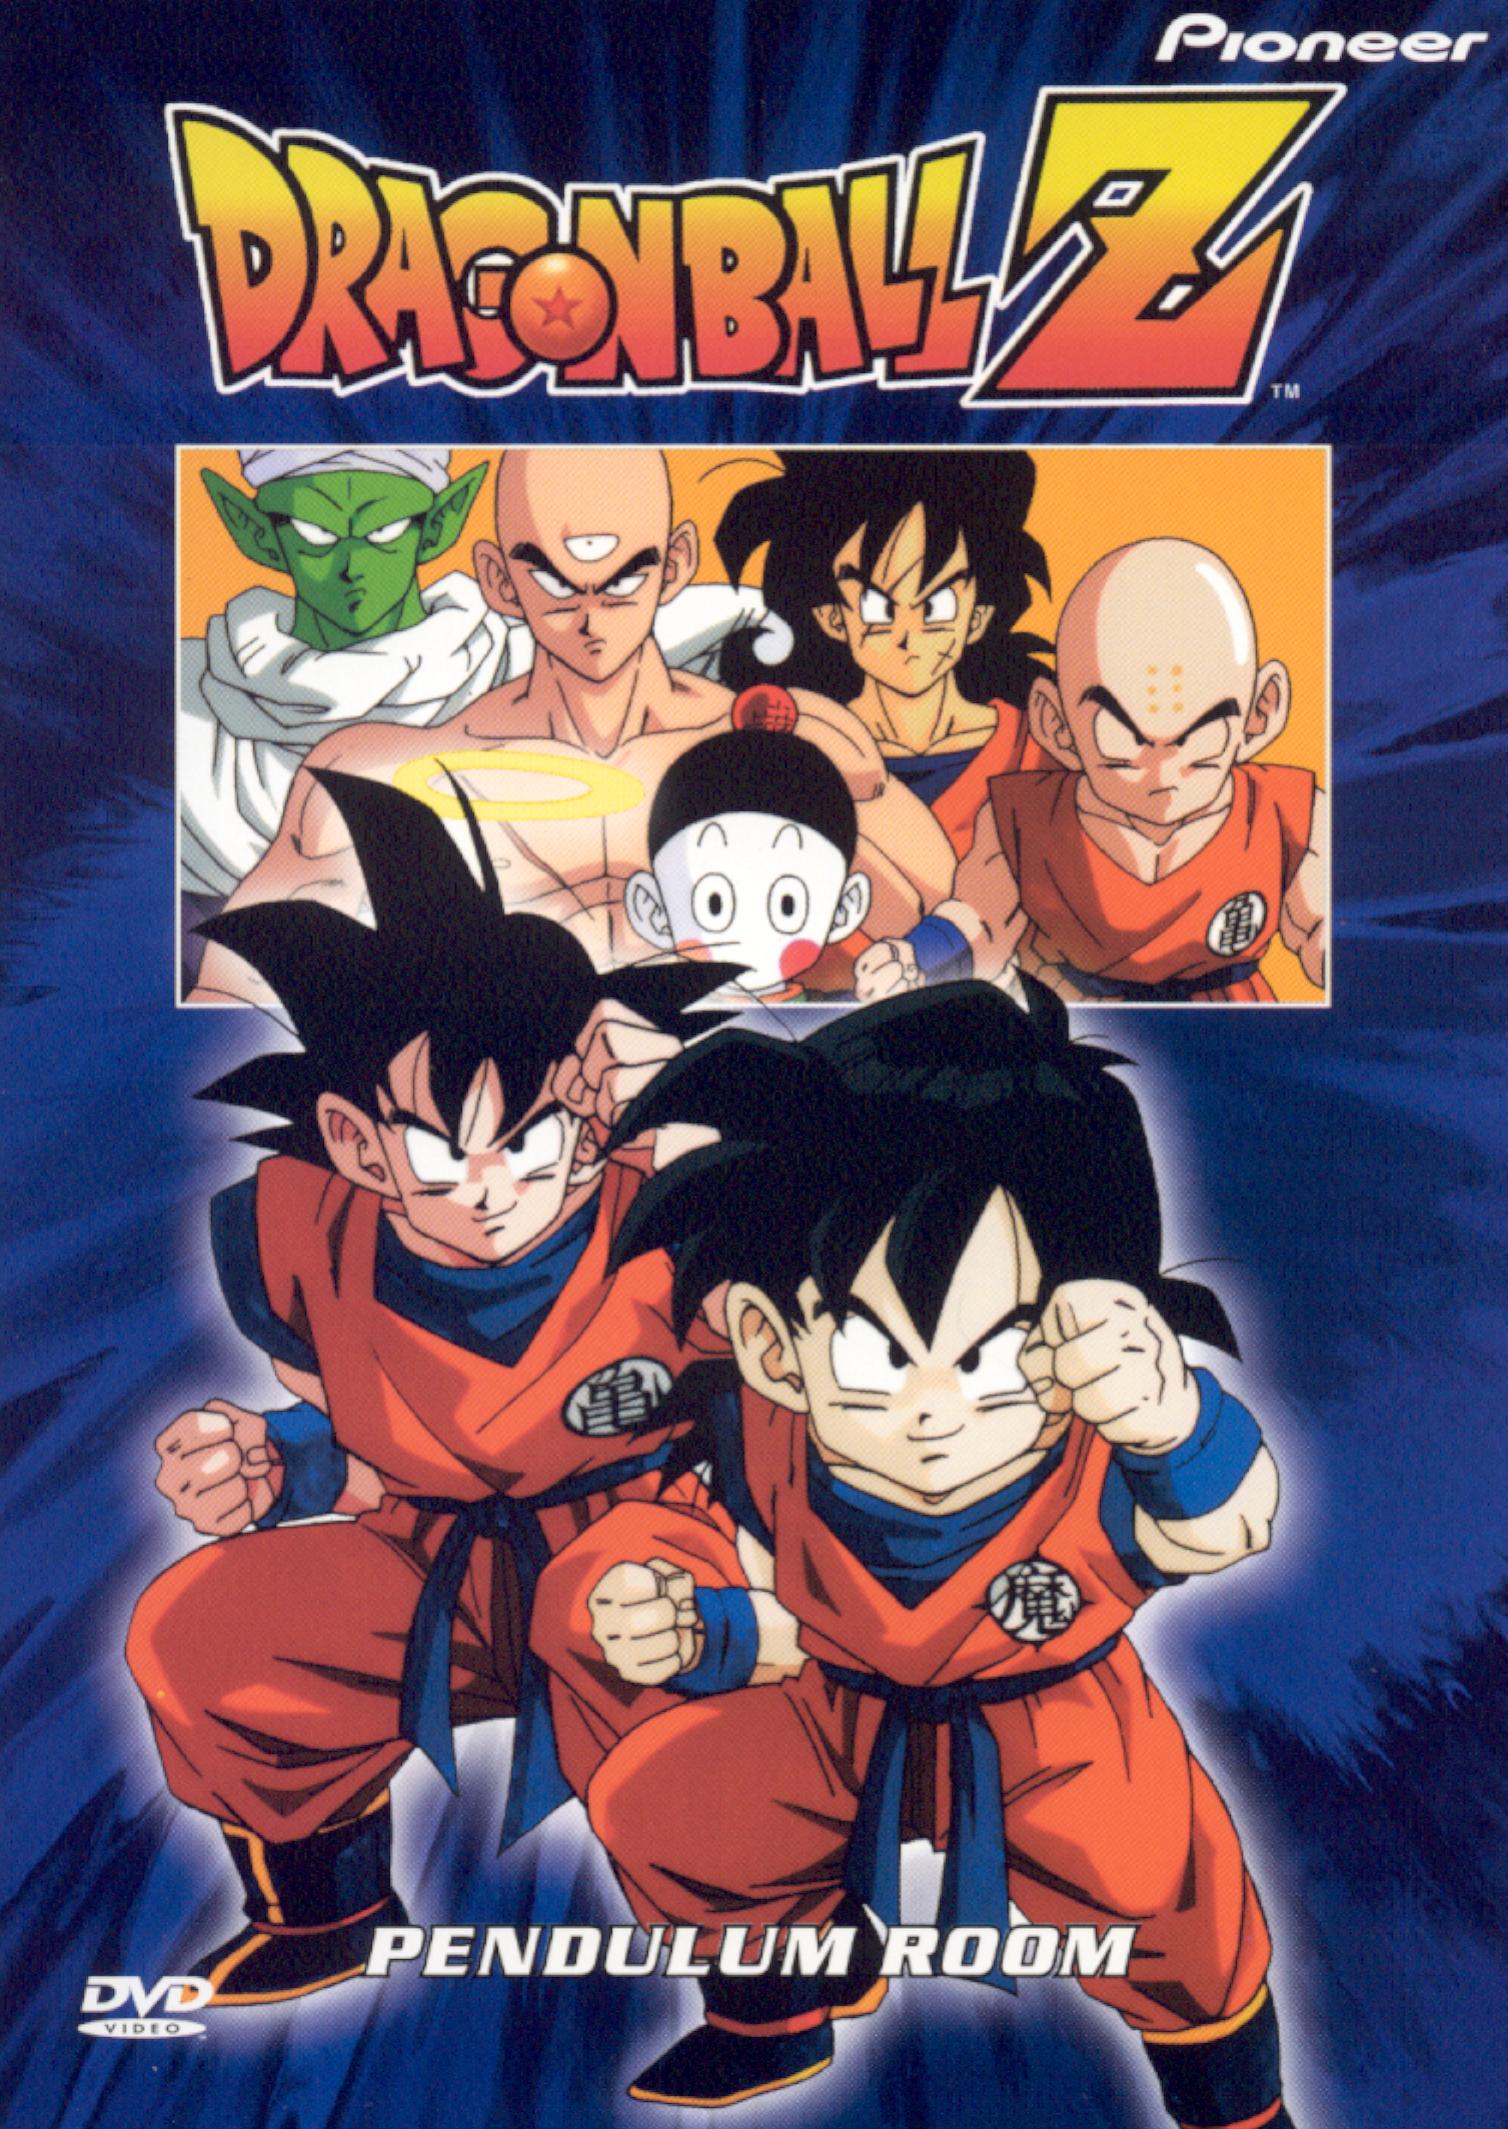 New Dragon Ball Z: Season 1 - 39 Episodes, 6 Disks, Complete Vegeta Saga  (DVD)